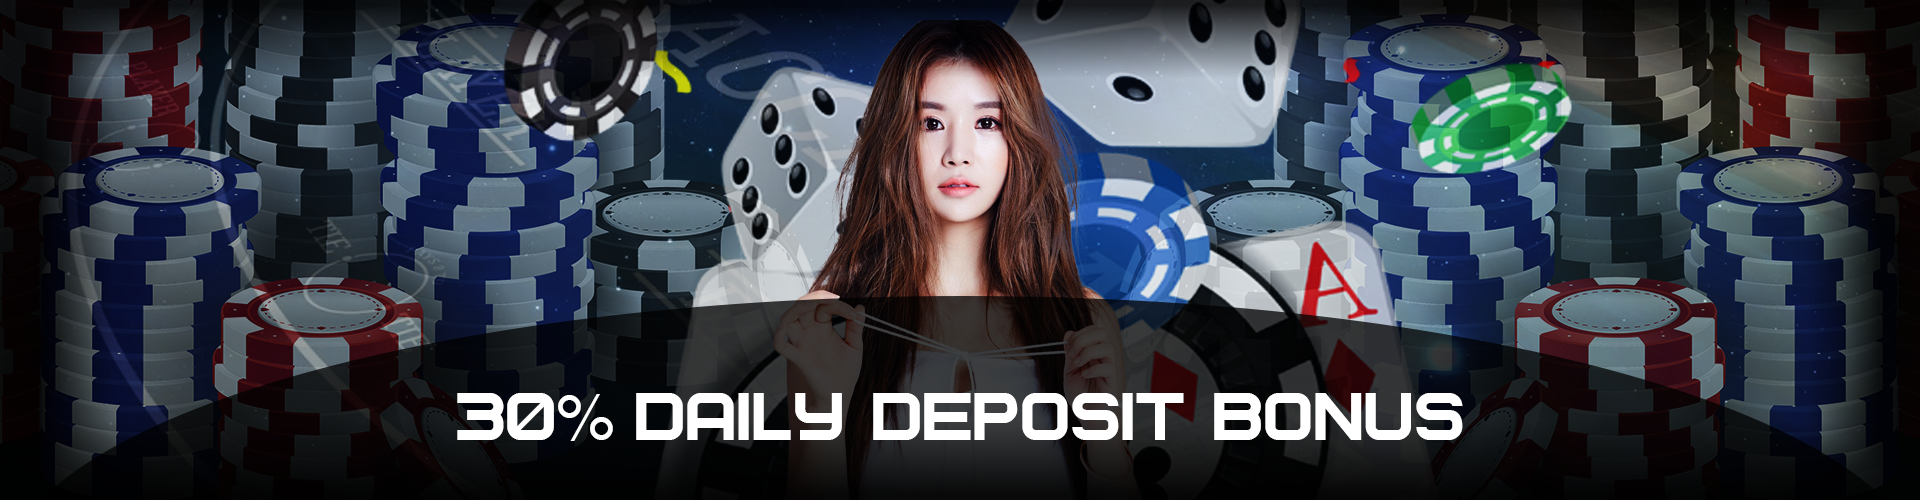 Online Casino Malaysia  DAILY DEPOSIT BONUS 30%